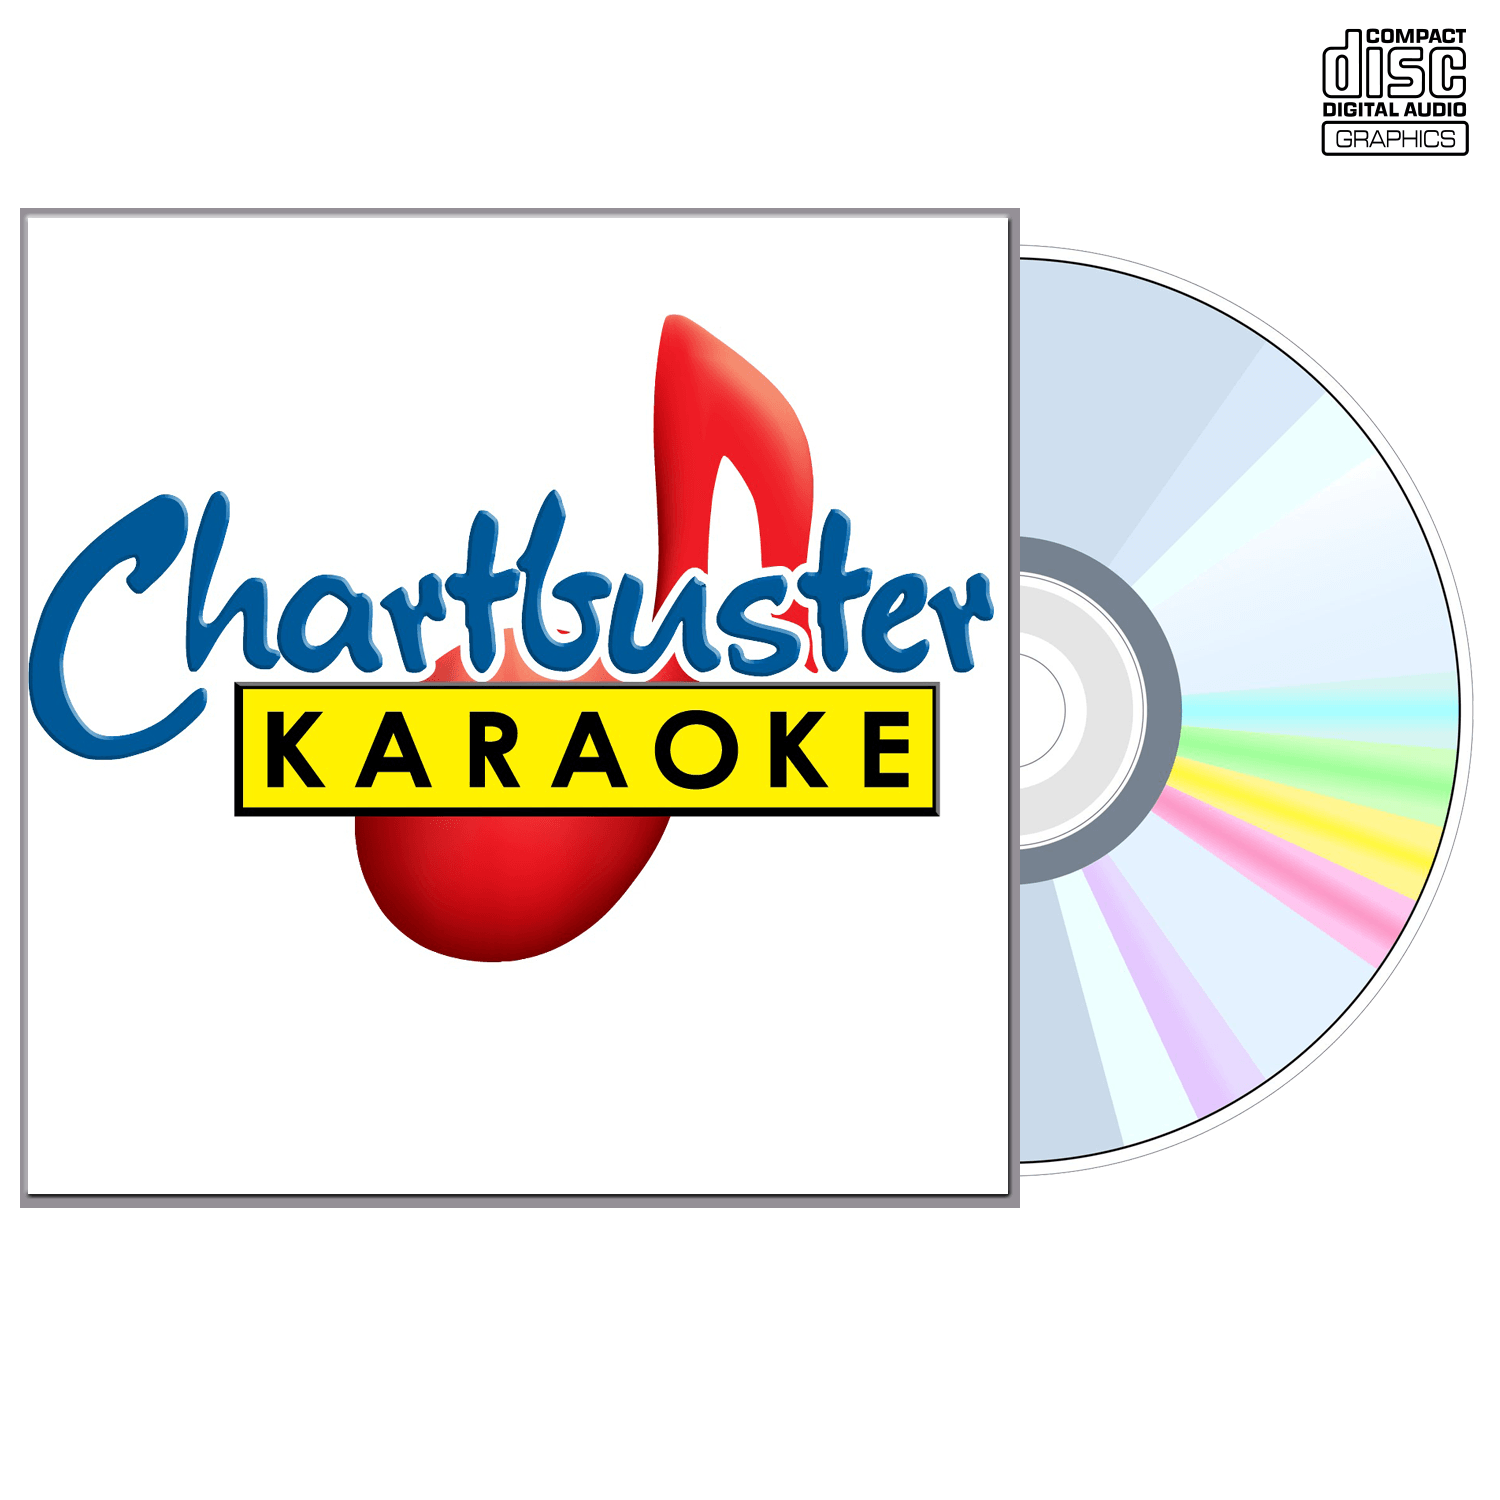 Rod Stewart Ballads Album - CD+G - Chartbuster Karaoke - Karaoke Home Entertainment